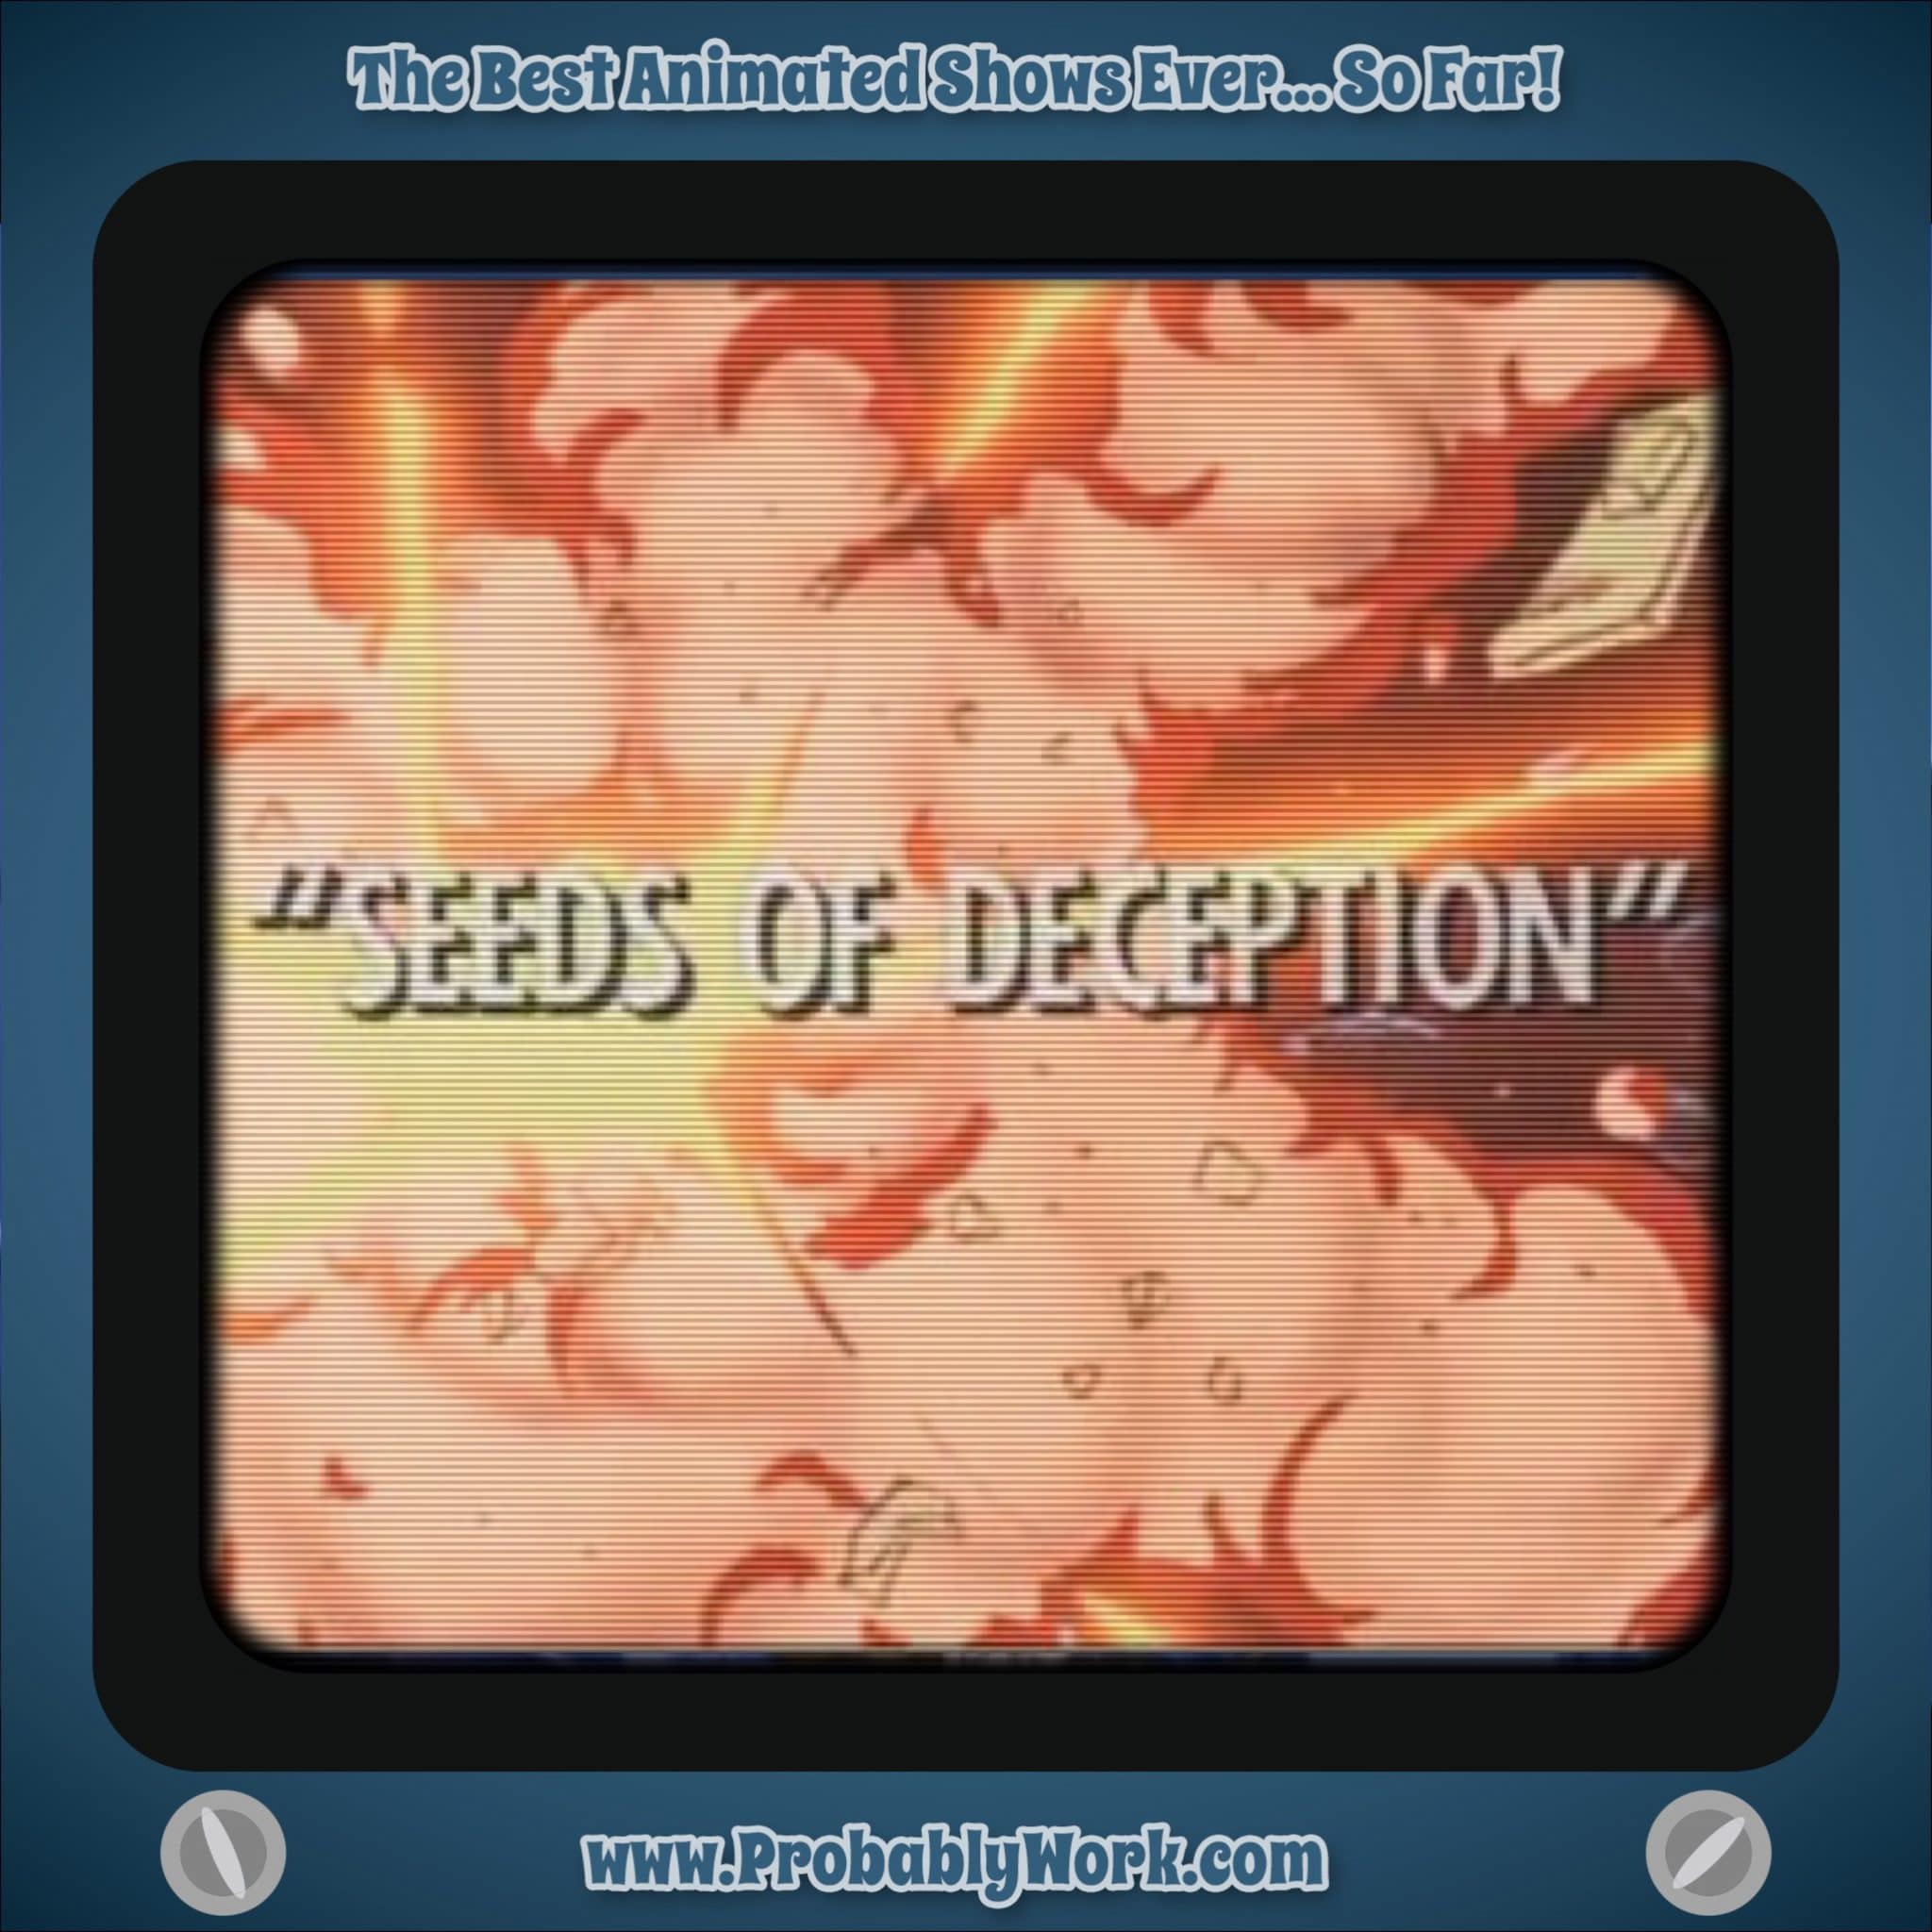 ExoSquad (1994), S01E02, "Seeds of Deception"